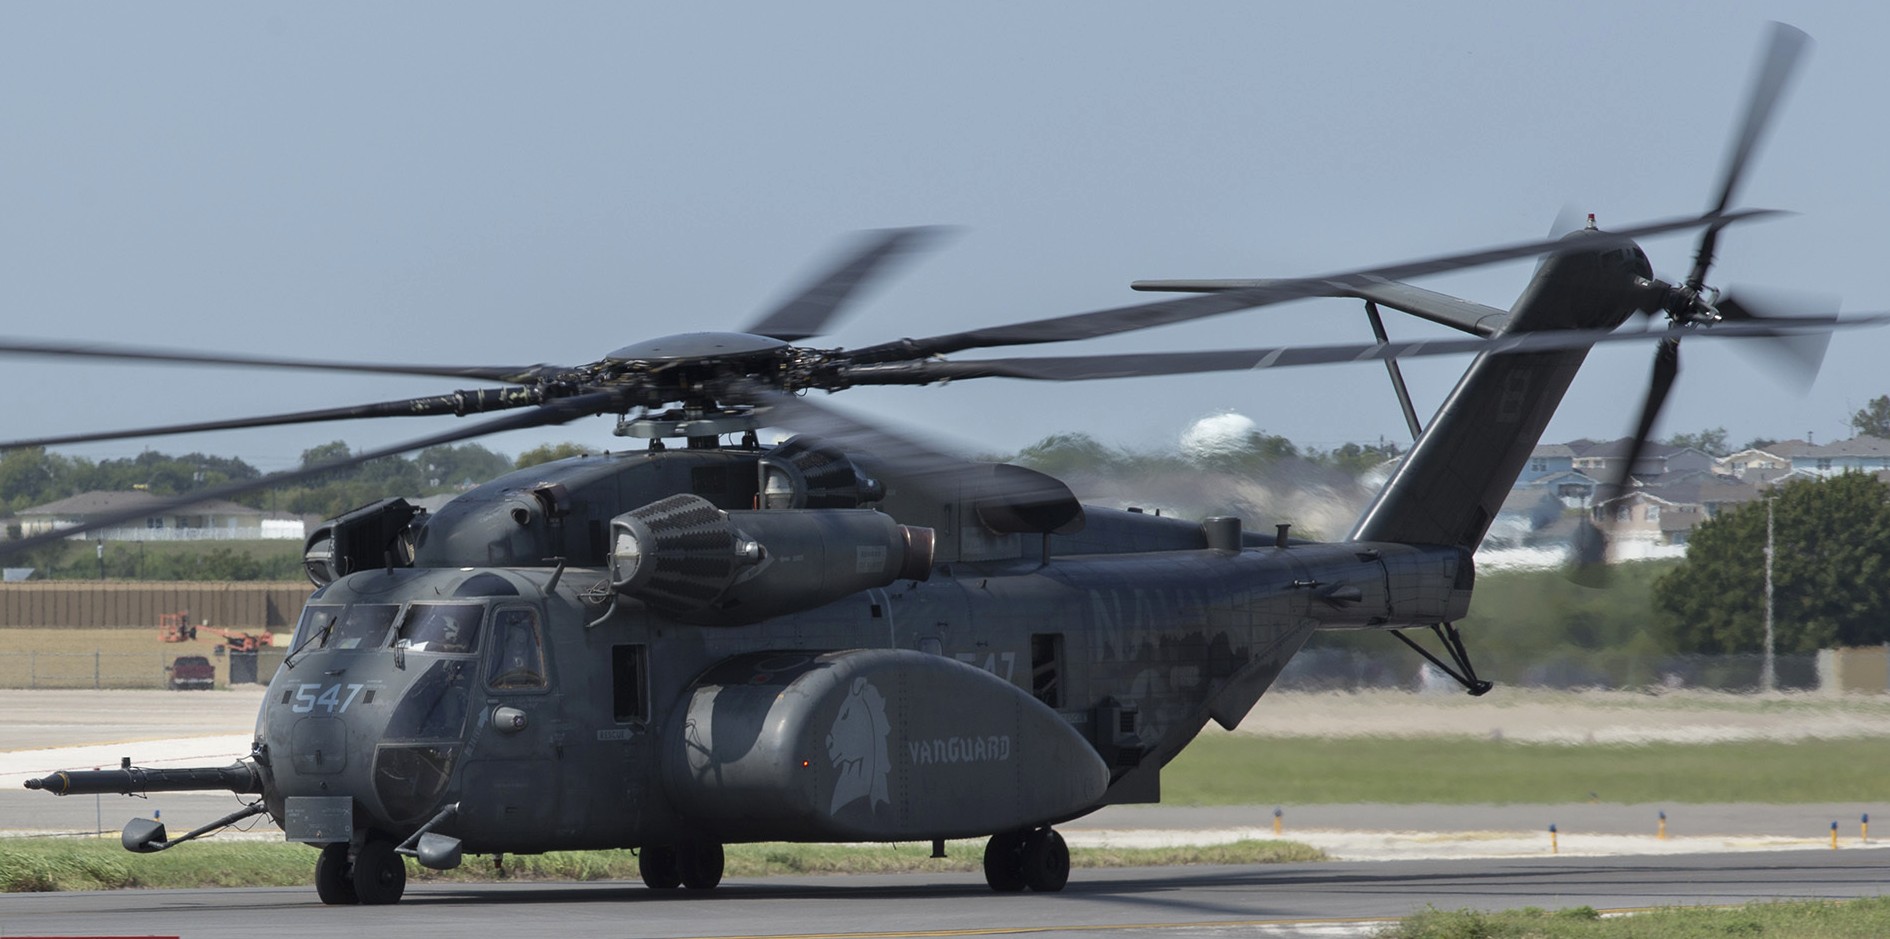 hm-14 vanguard helicopter mine countermeasures squadron navy mh-53e sea dragon 136